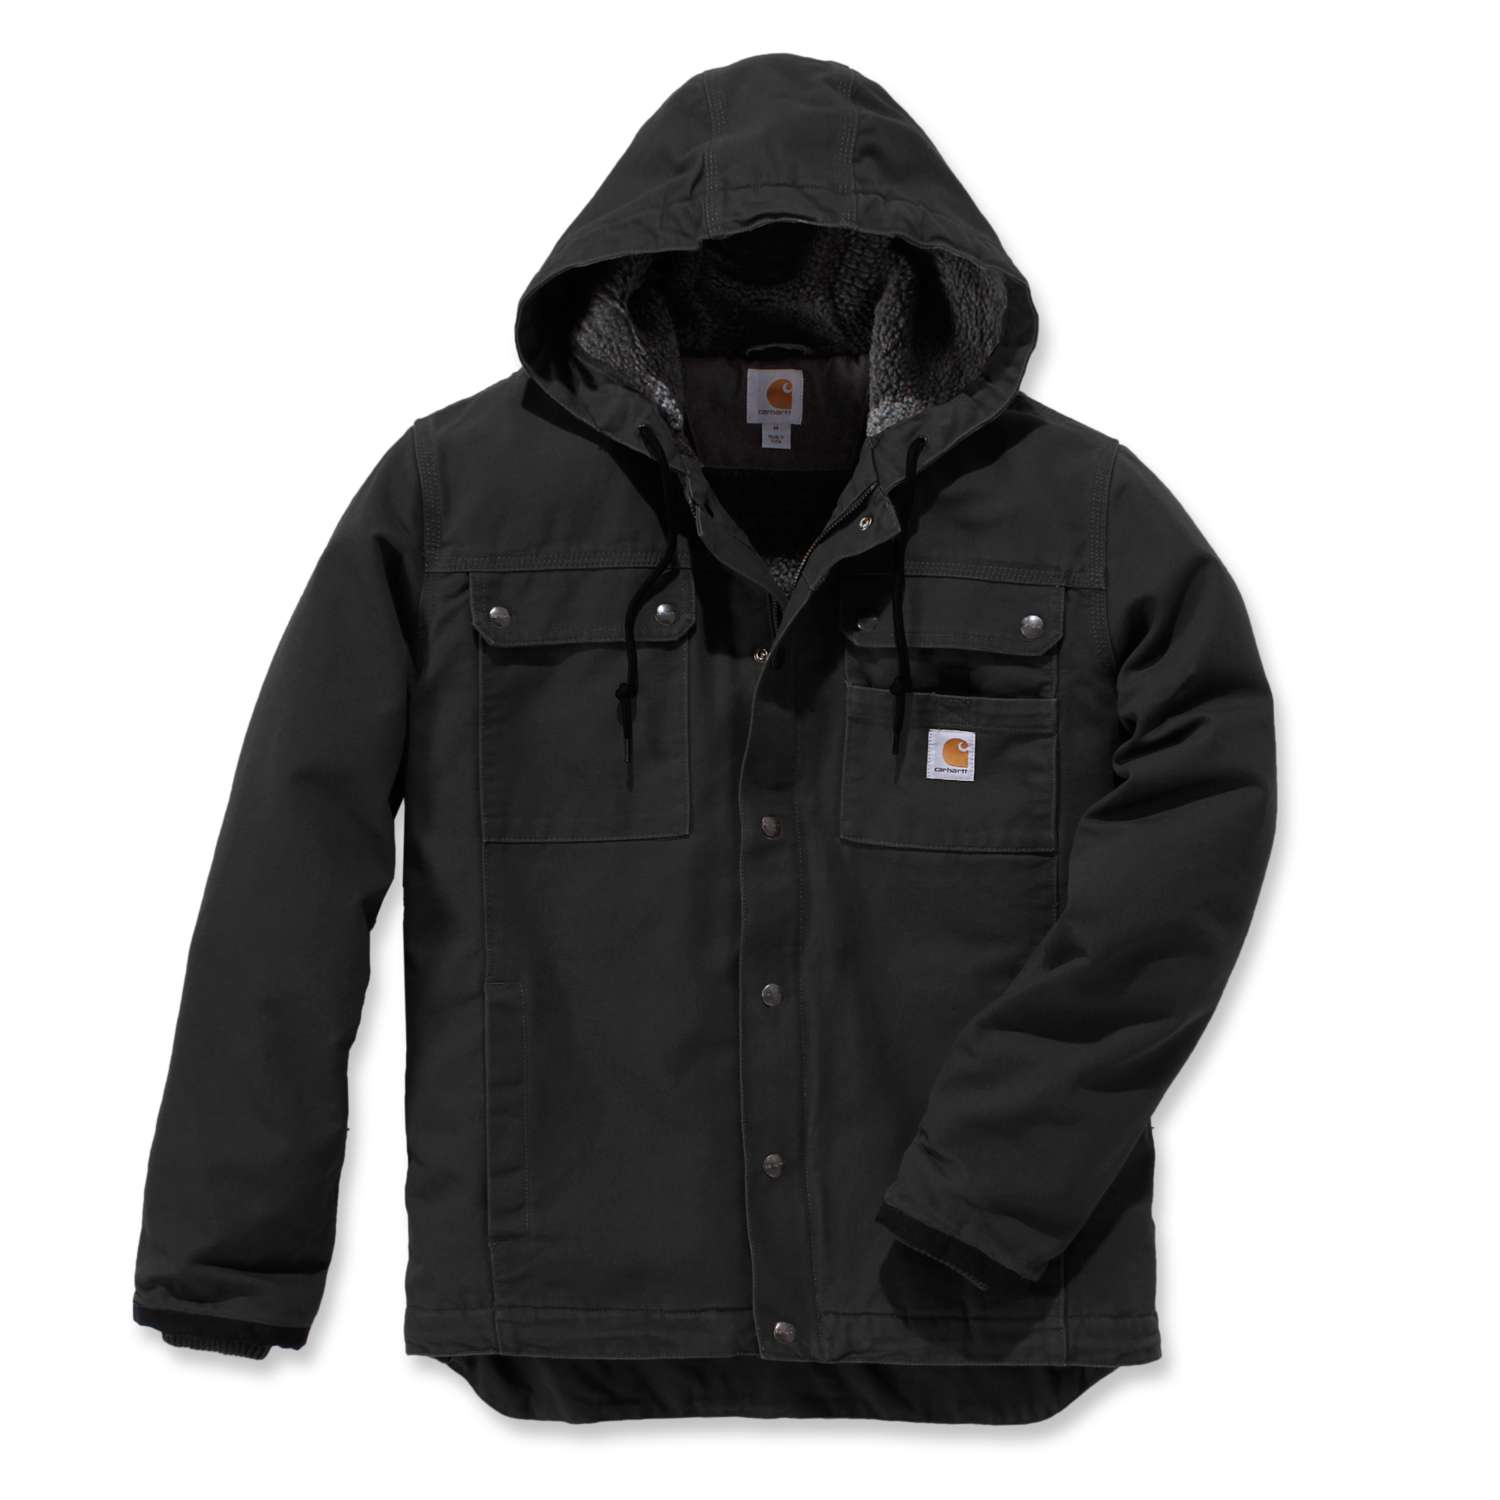 Carhartt Bartless Jacket – Black – M Markovitz Limited